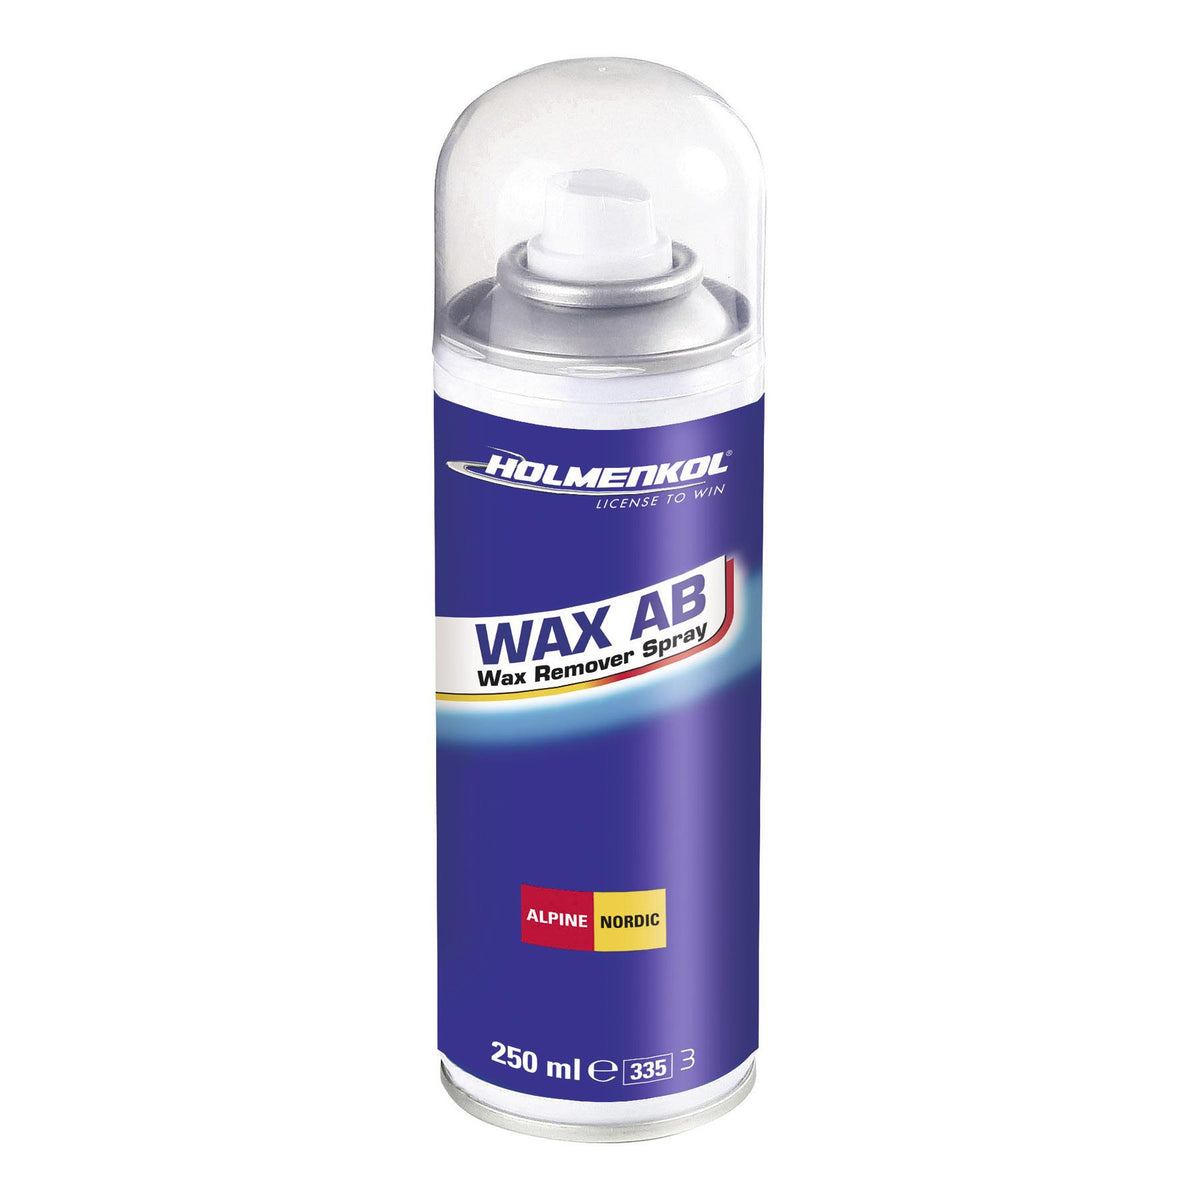 Holmenkol WaxAB Remover Spray 250mL